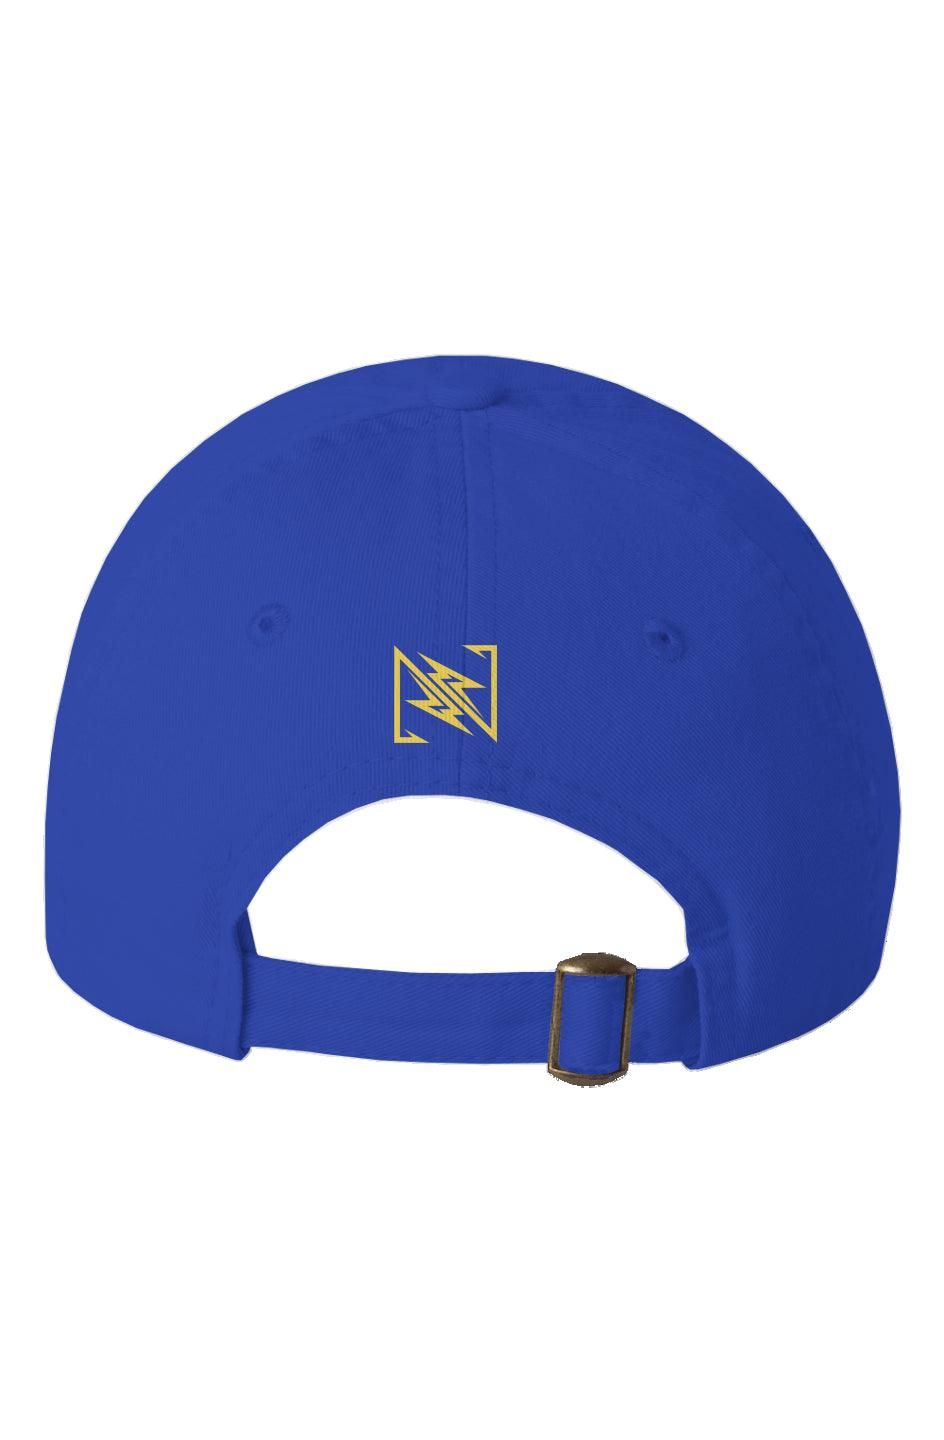 NX Vogue Youth Baseball Cap hats one size Royal 